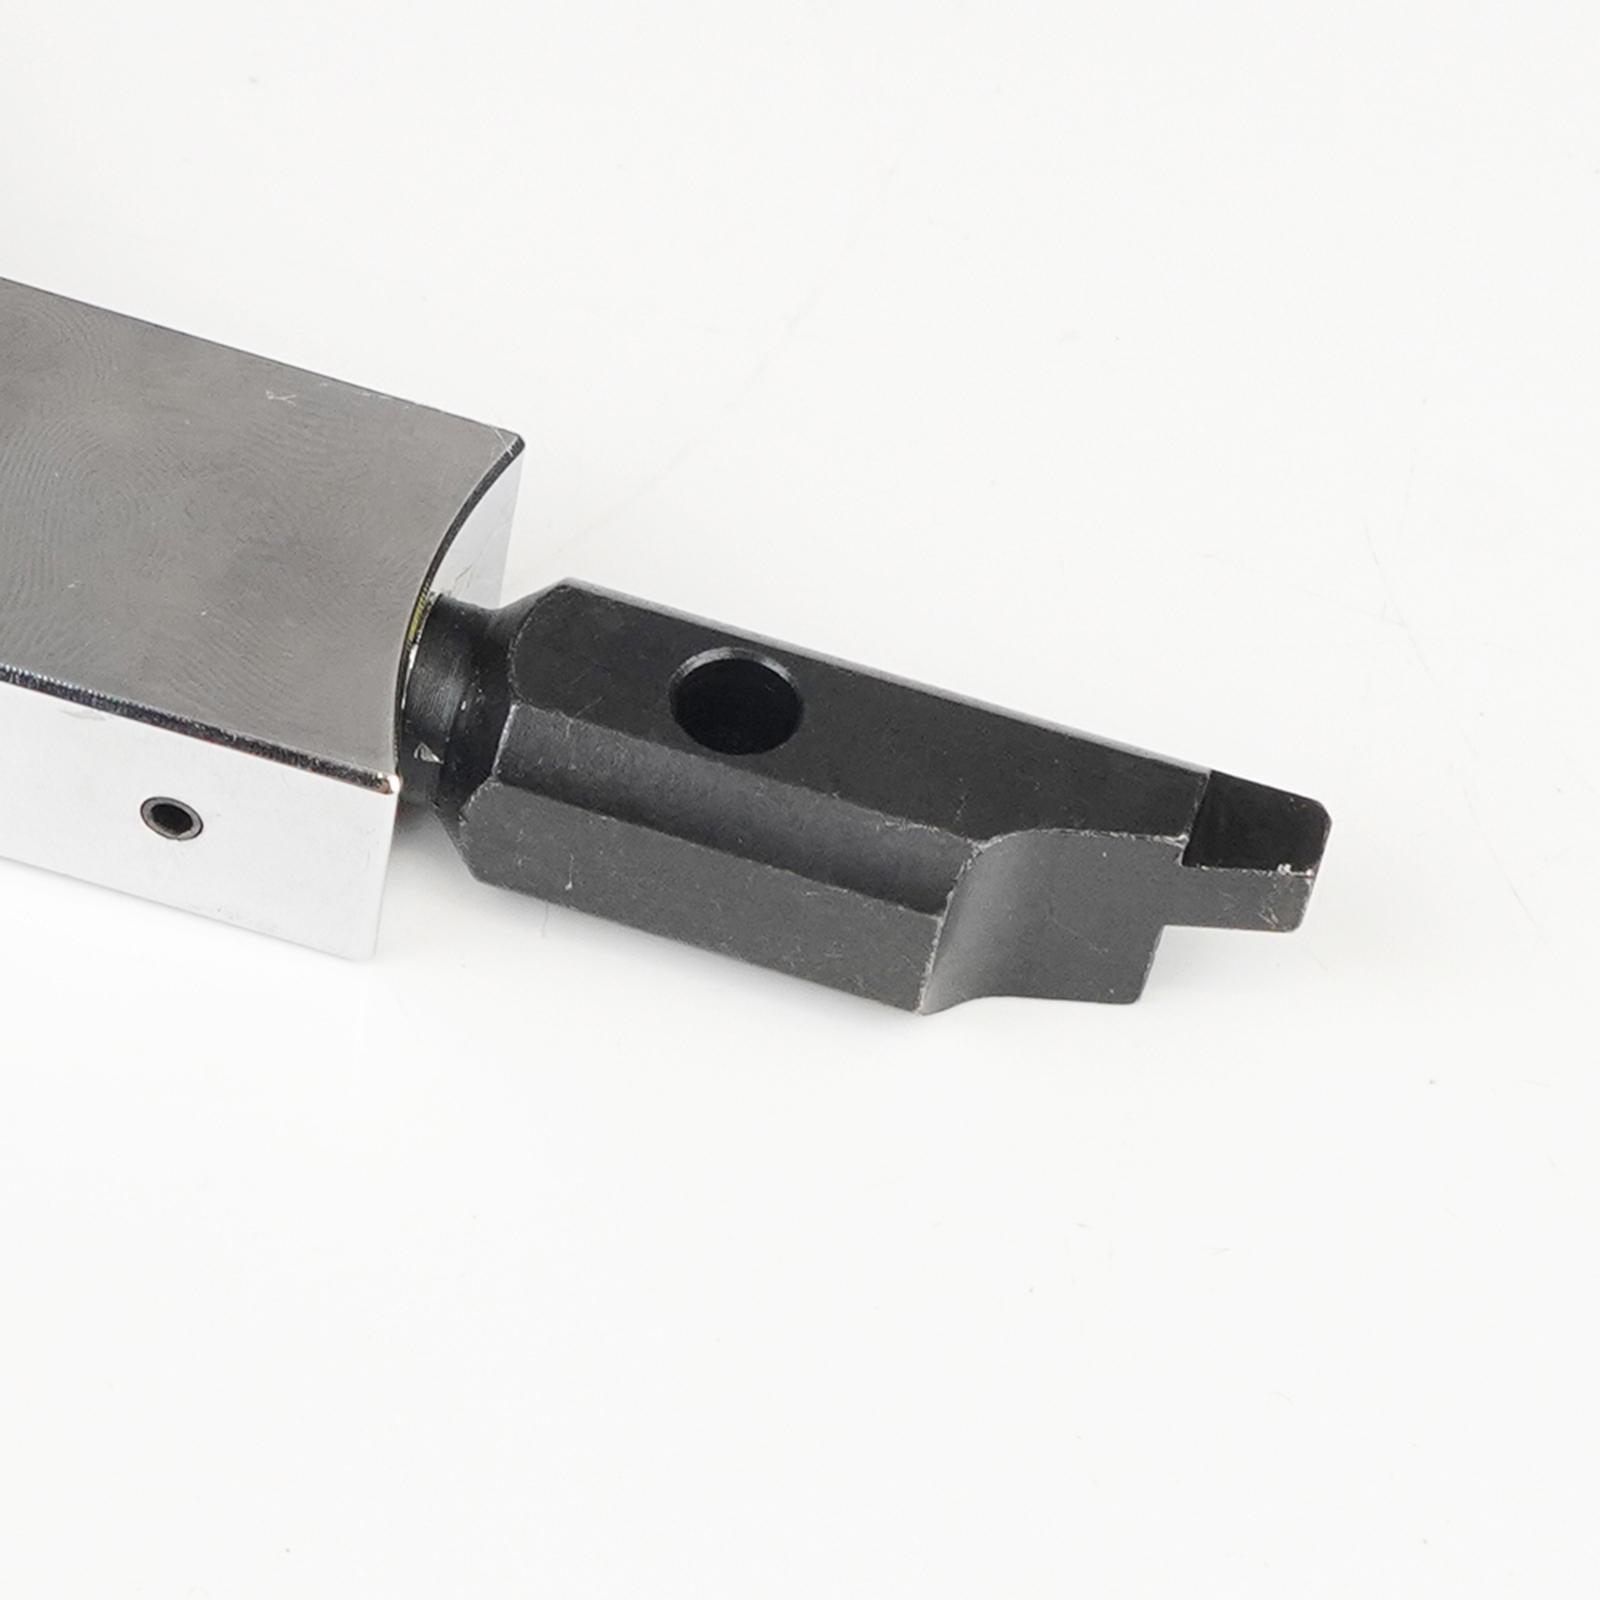 Shifter Turn Signal Lever Hazard Tilt Kit Parts Accessories for Columns Silver